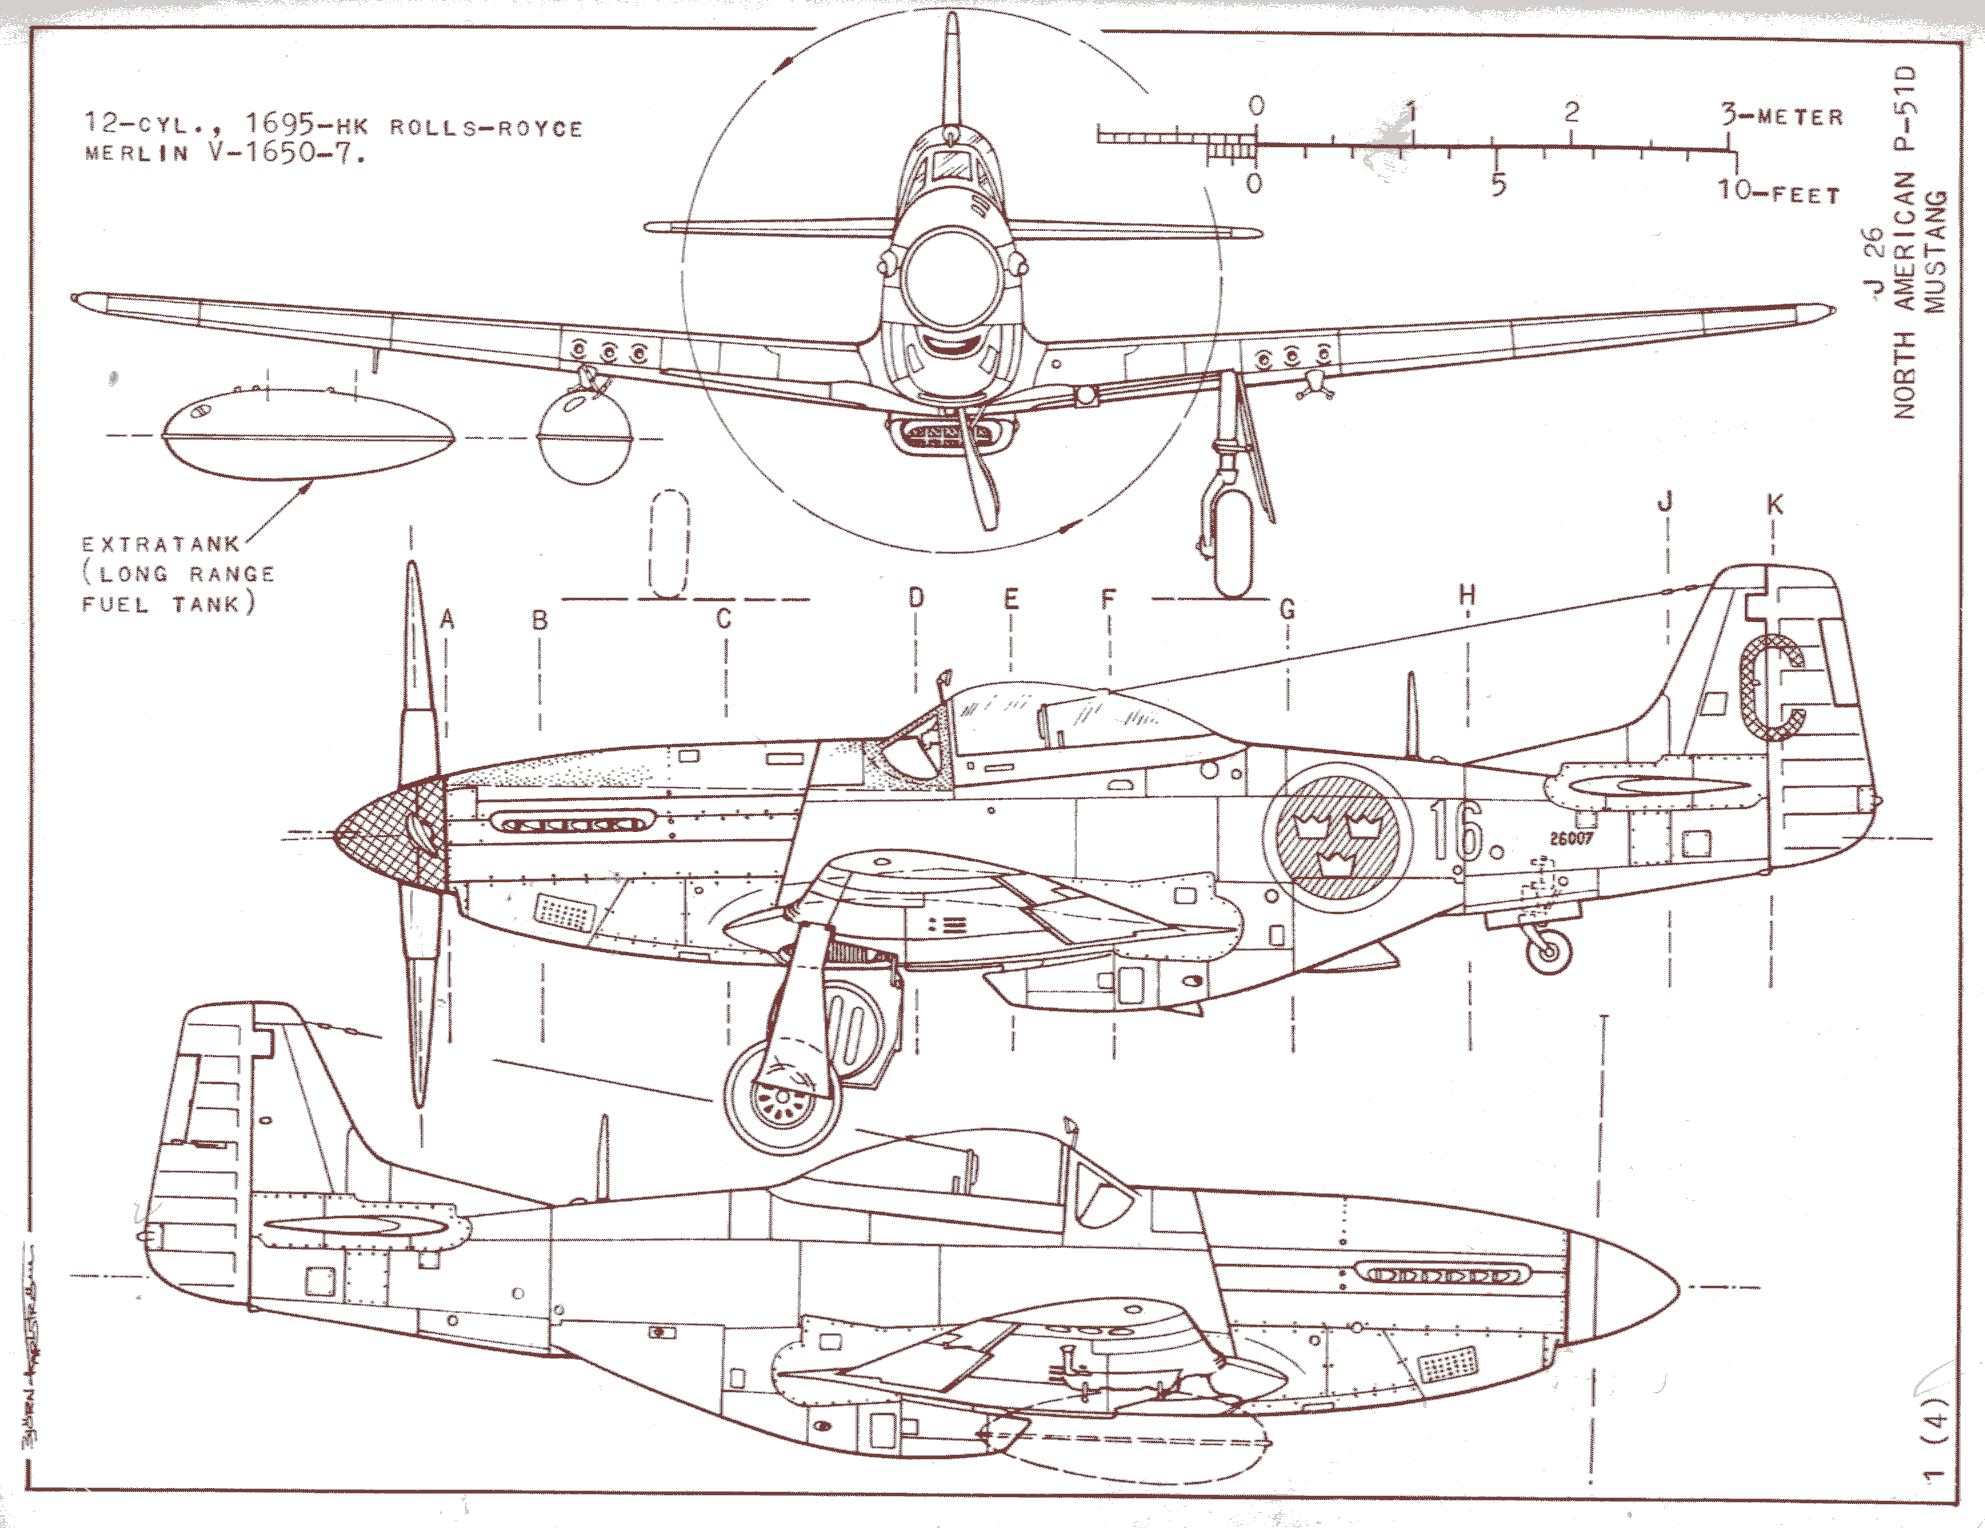 North american p-51 mustang — википедия с видео // wiki 2